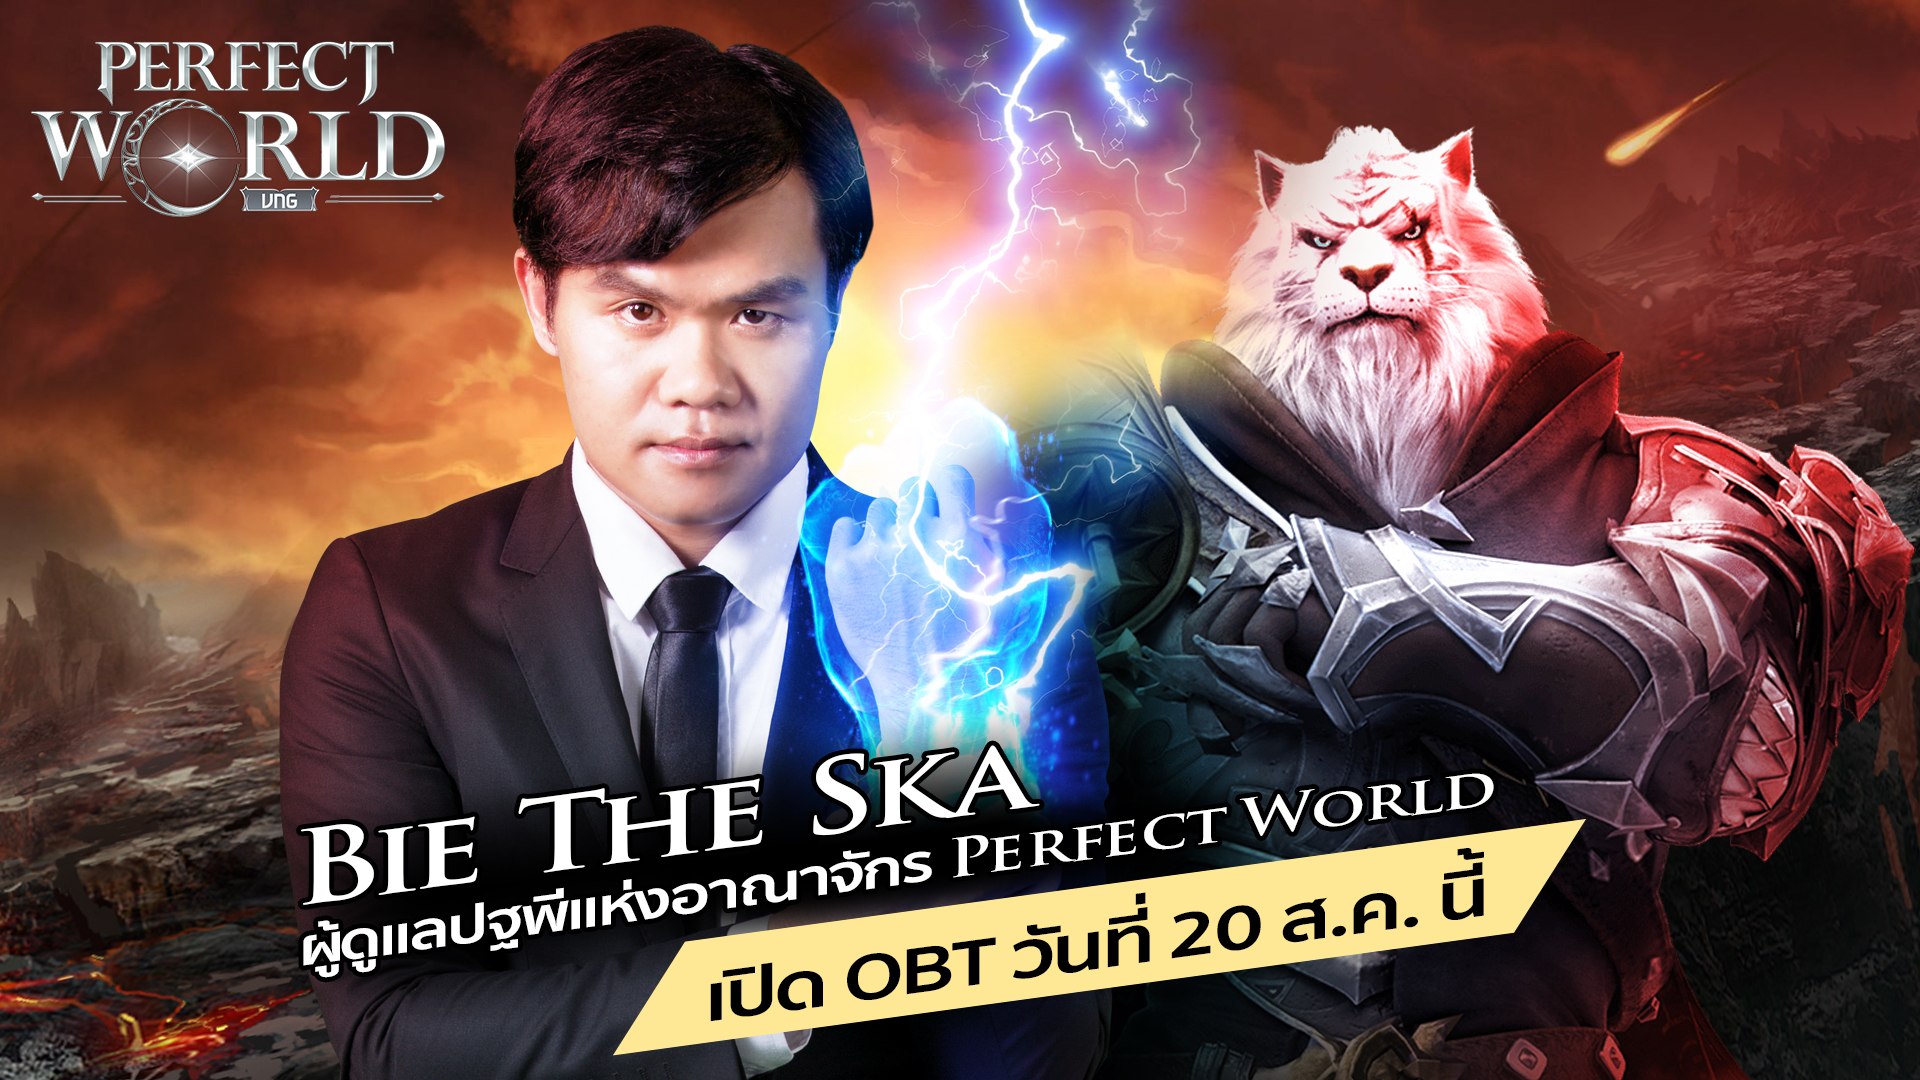 Perfect World VNG | Bie The Ska บี้เดอะสกา